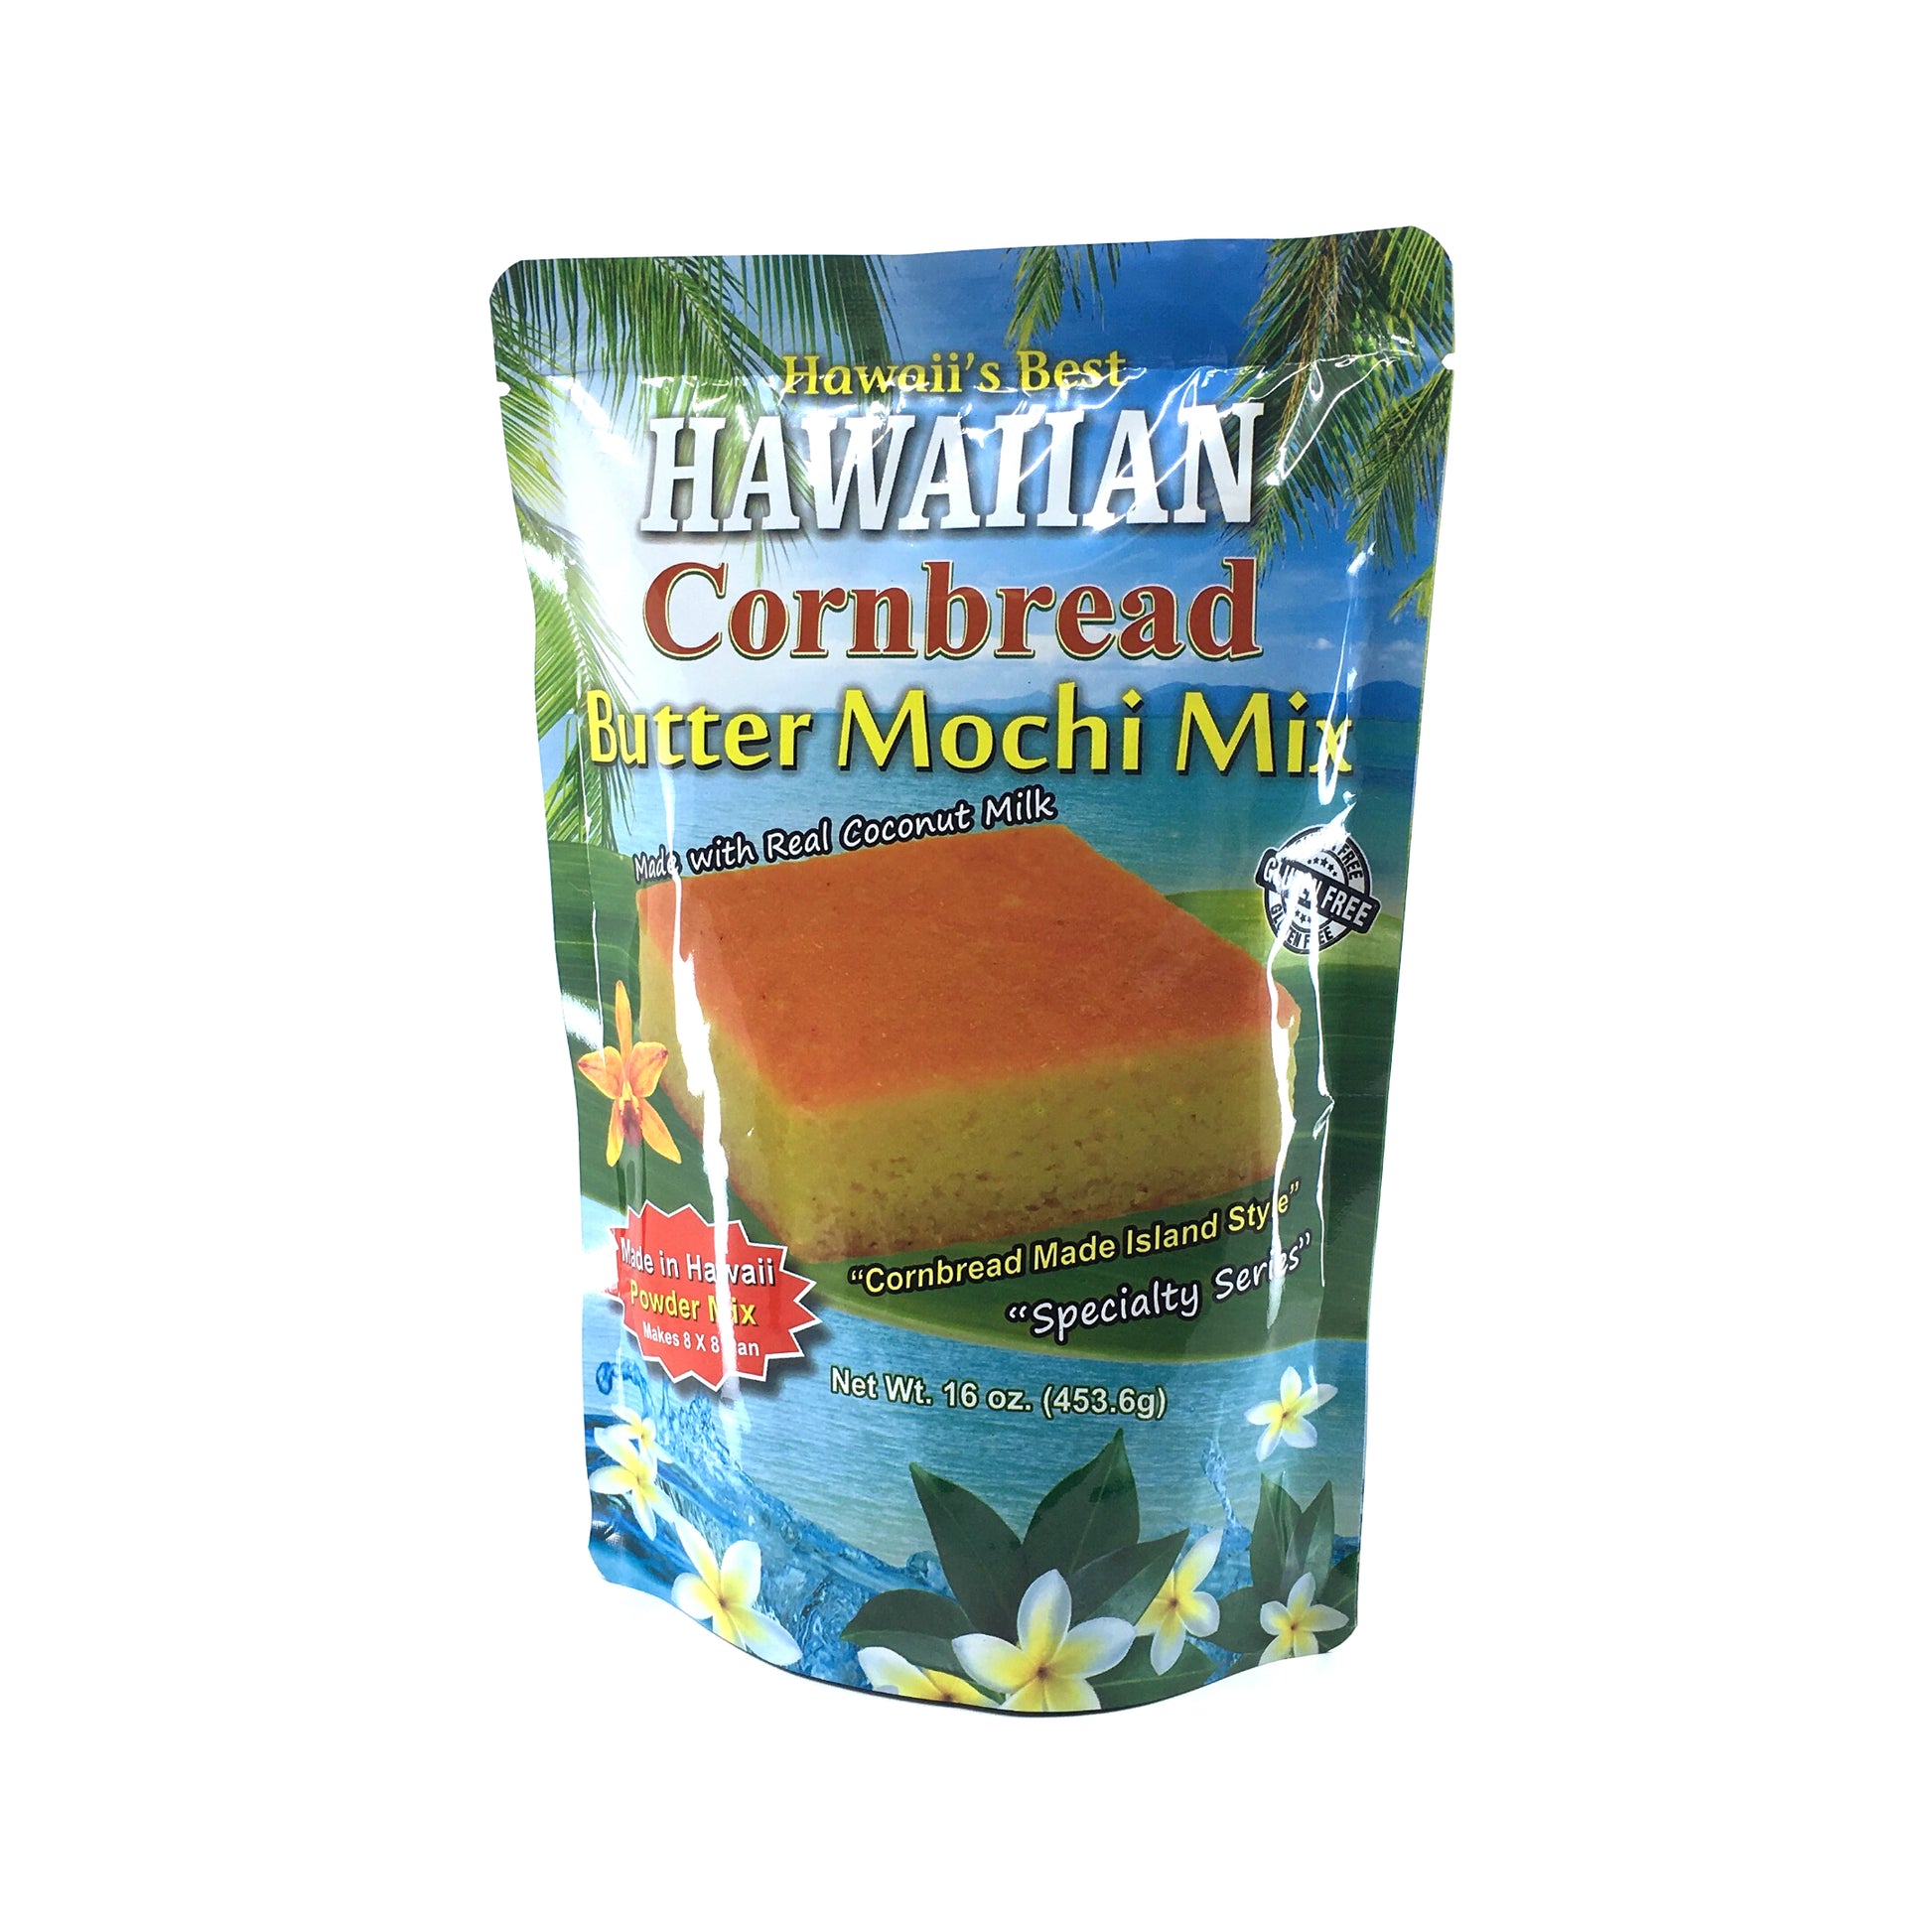 Hawaii's Best Cornbread Butter Mochi Mix - Wholesale Unlimited Inc.